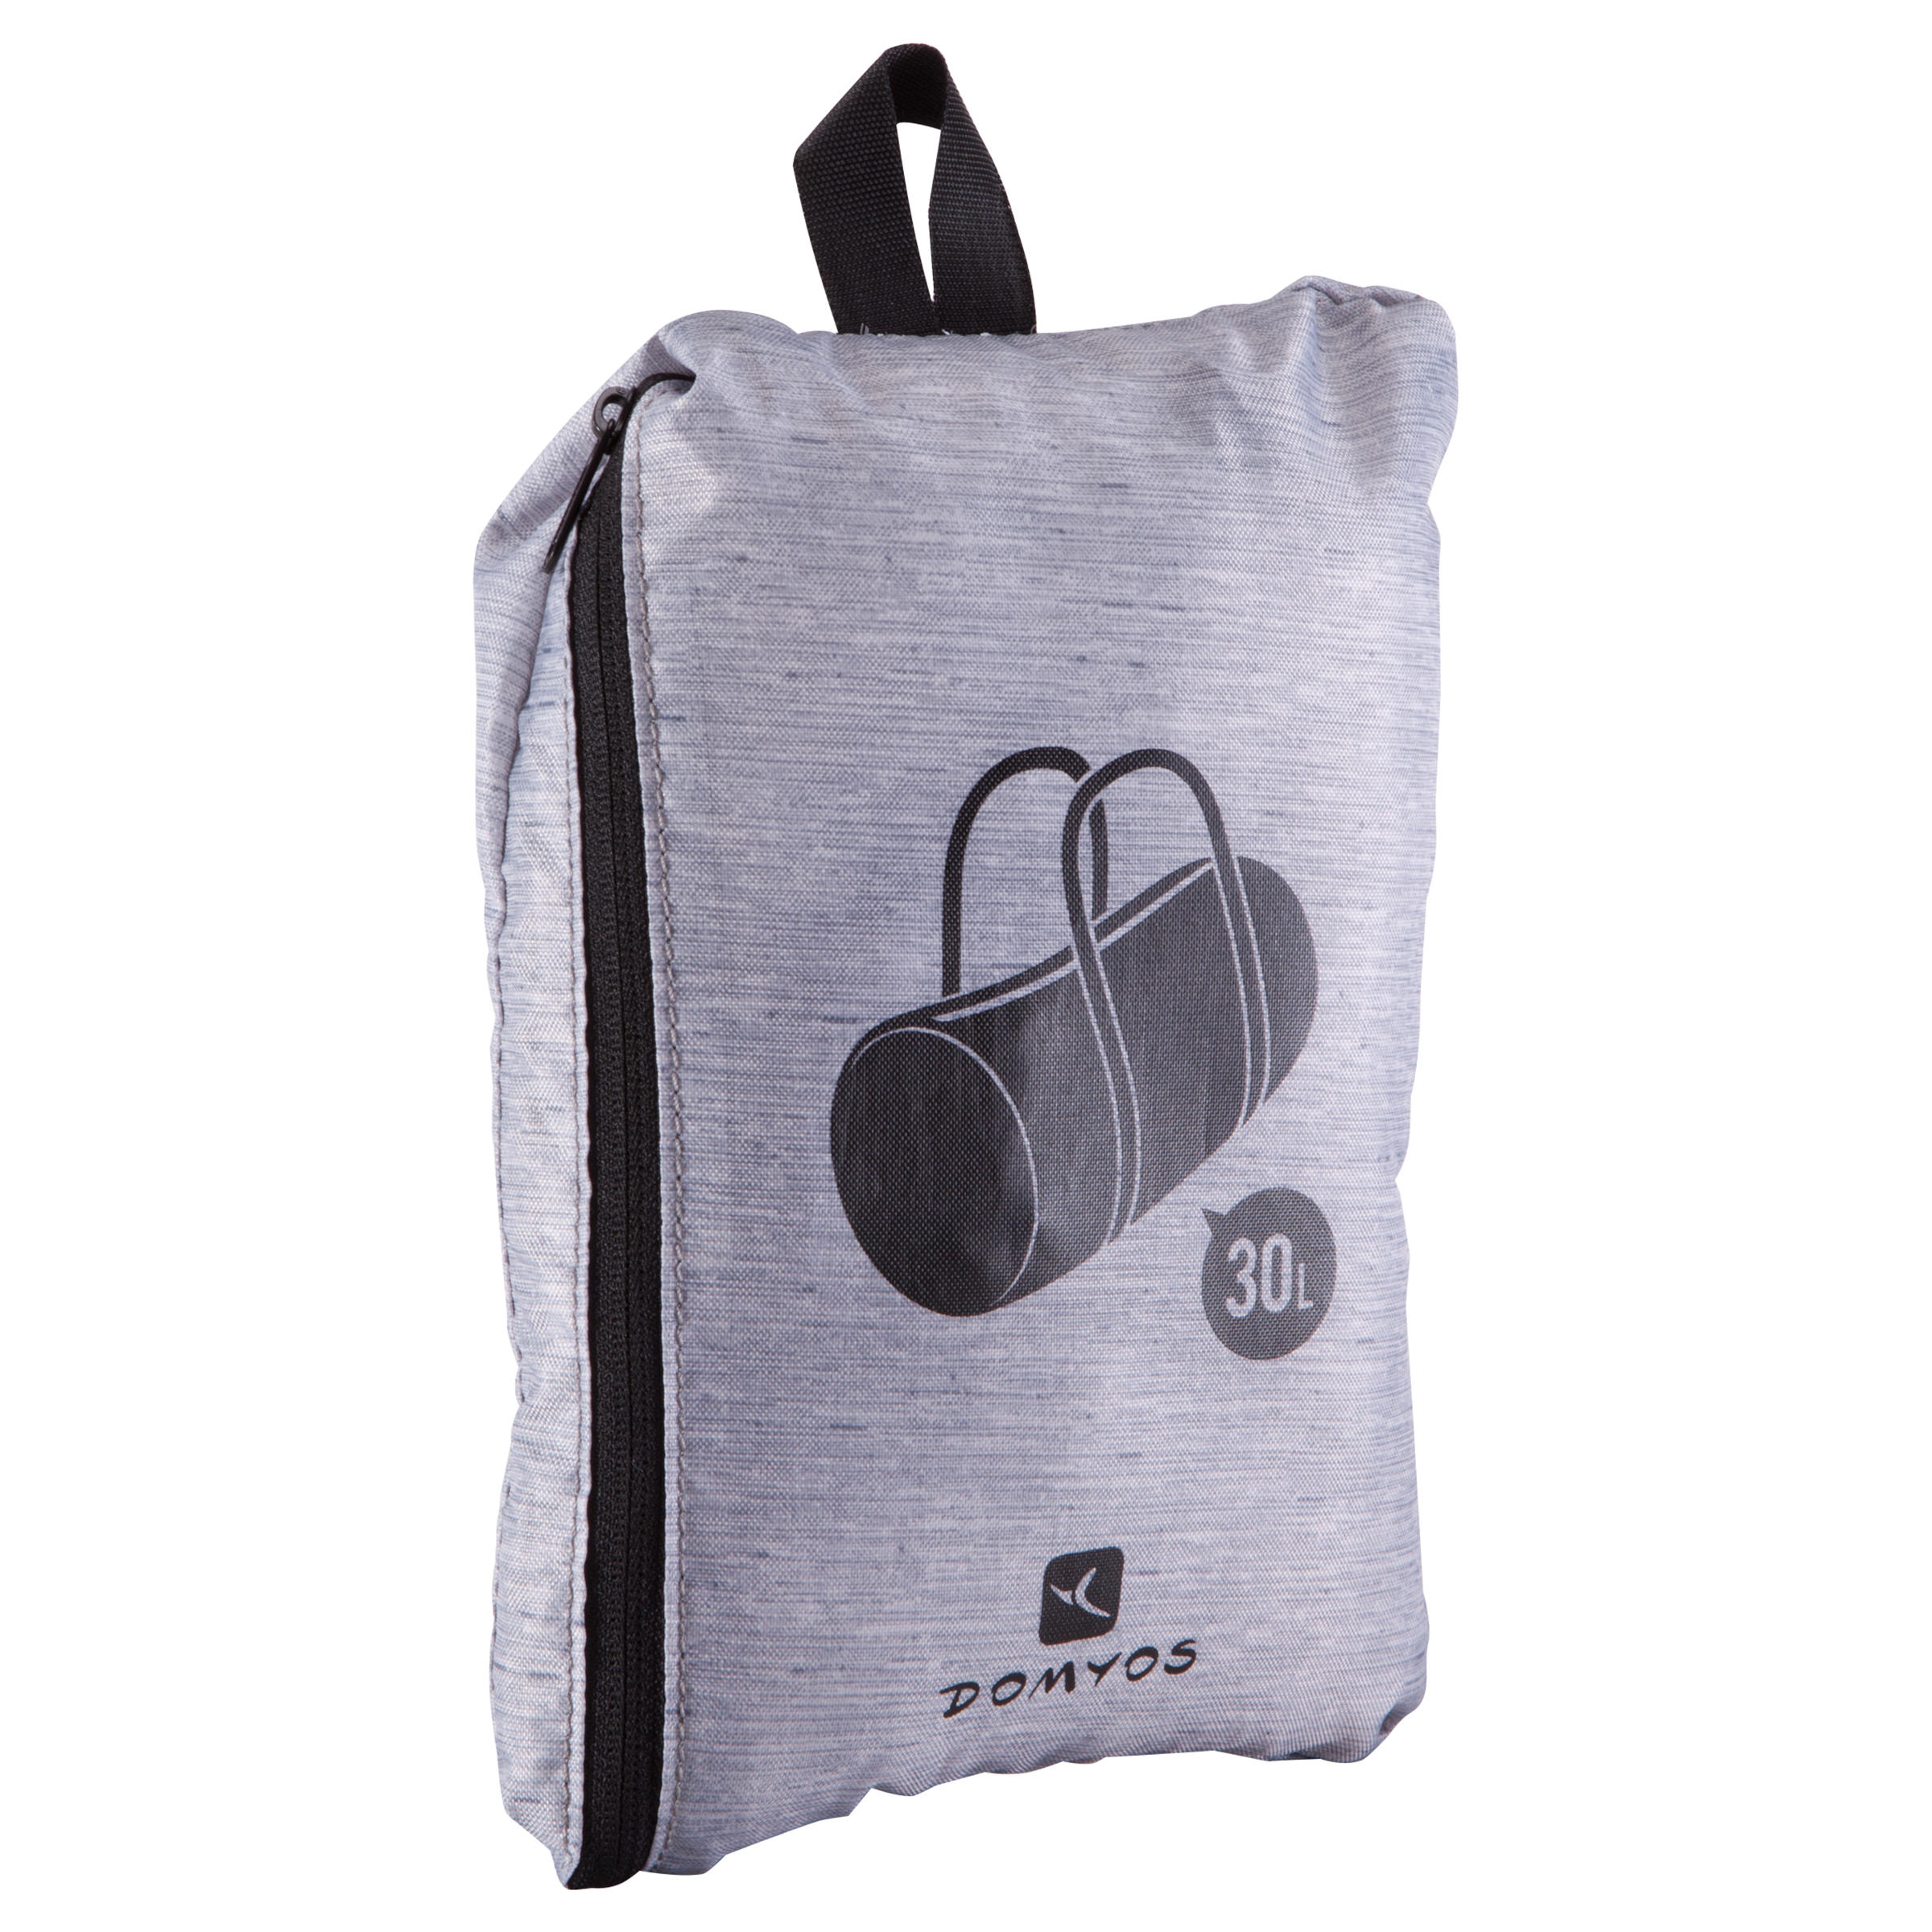 Buy 55 L Folding Duffle Bag Online At DecathlonIn